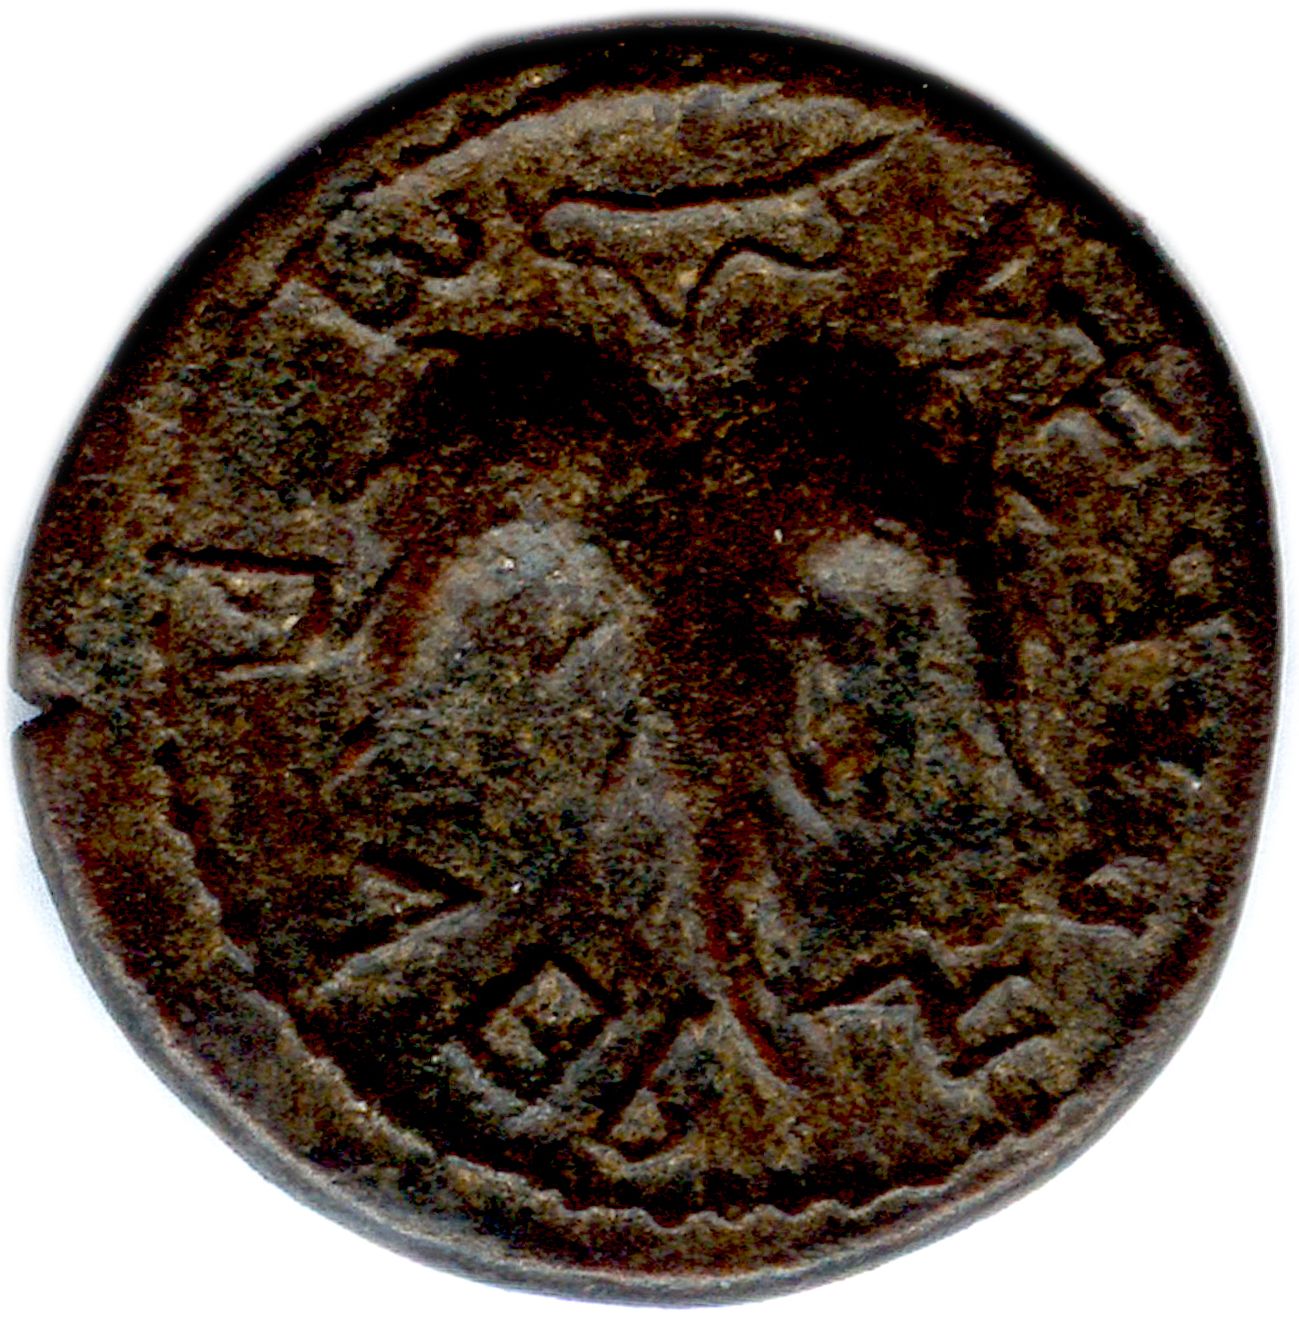 Null Judea Revolt of Bar Kochba 132-135

Vine leaf with circular inscription. 

&hellip;